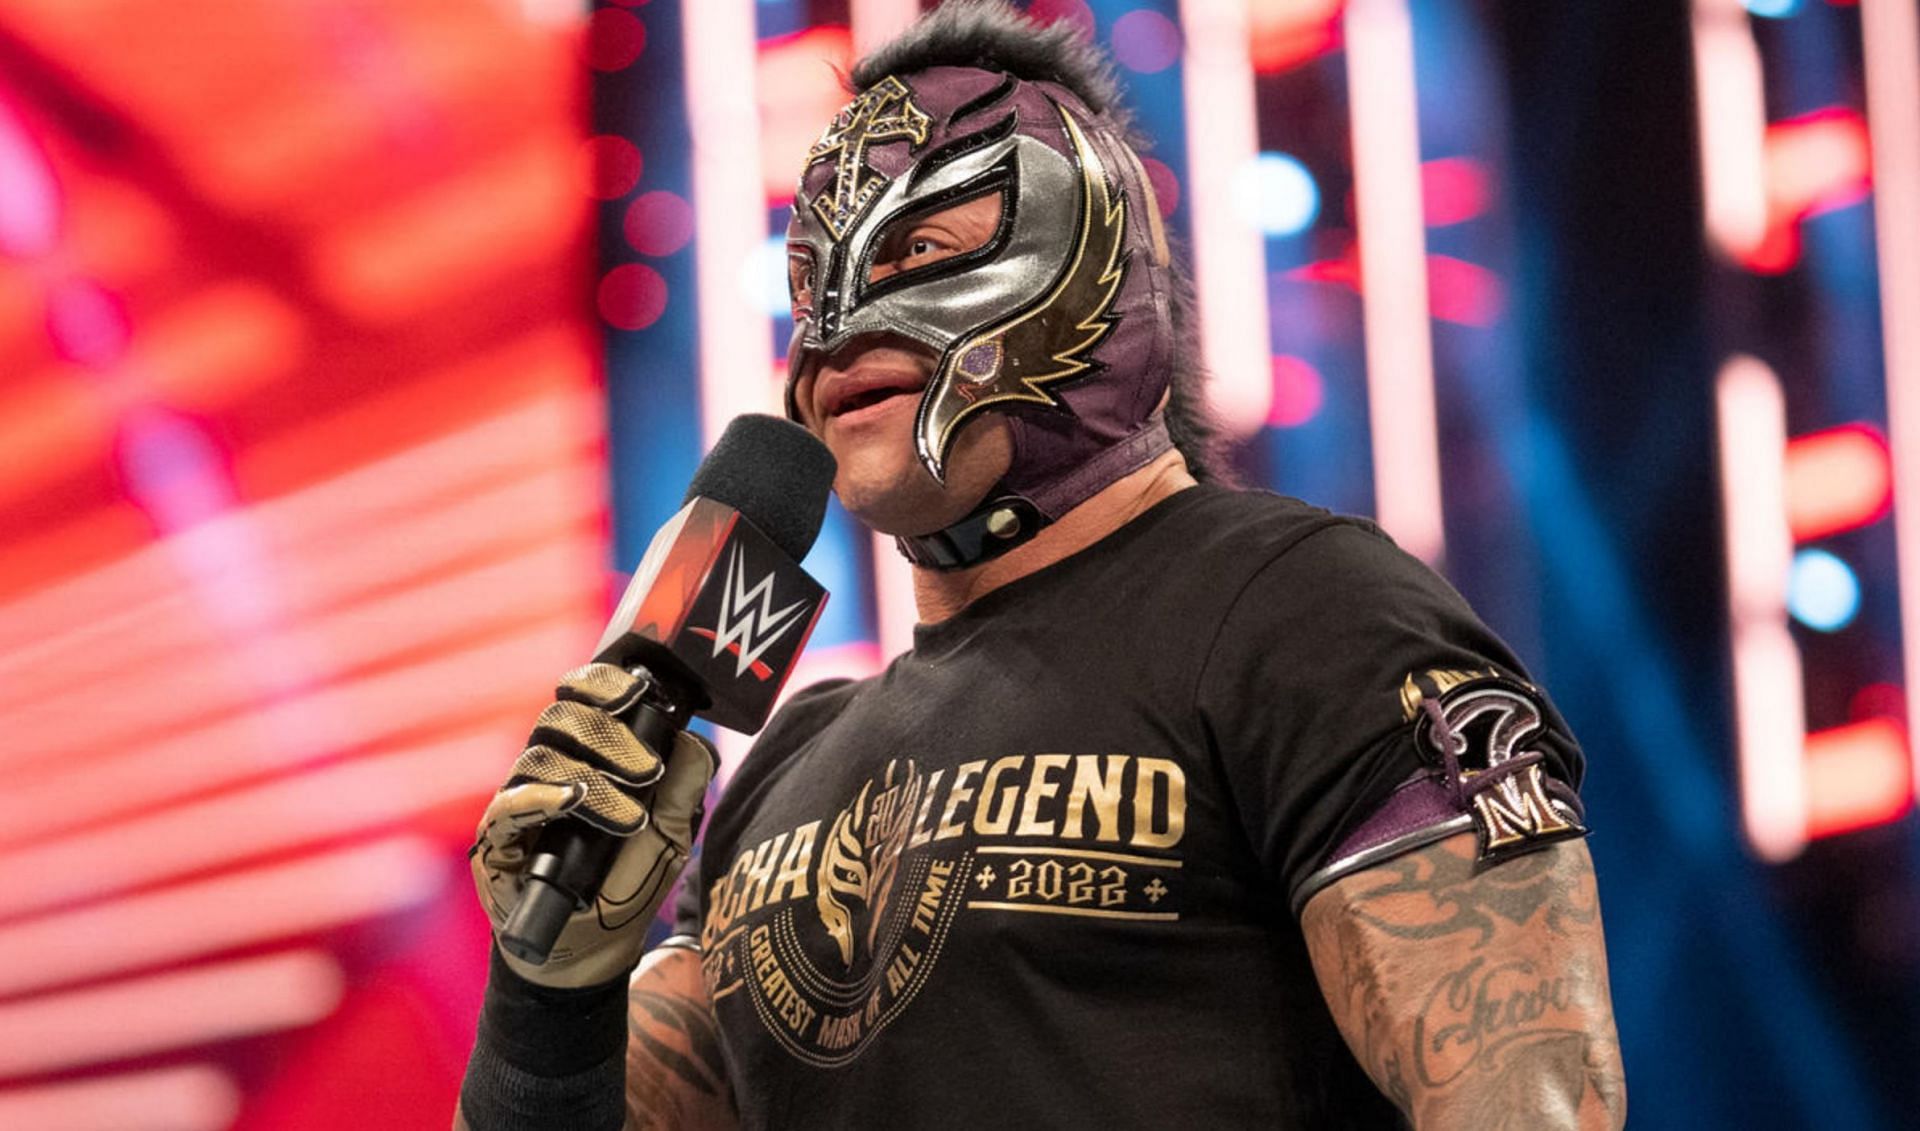 Former WWE champion Rey Mysterio